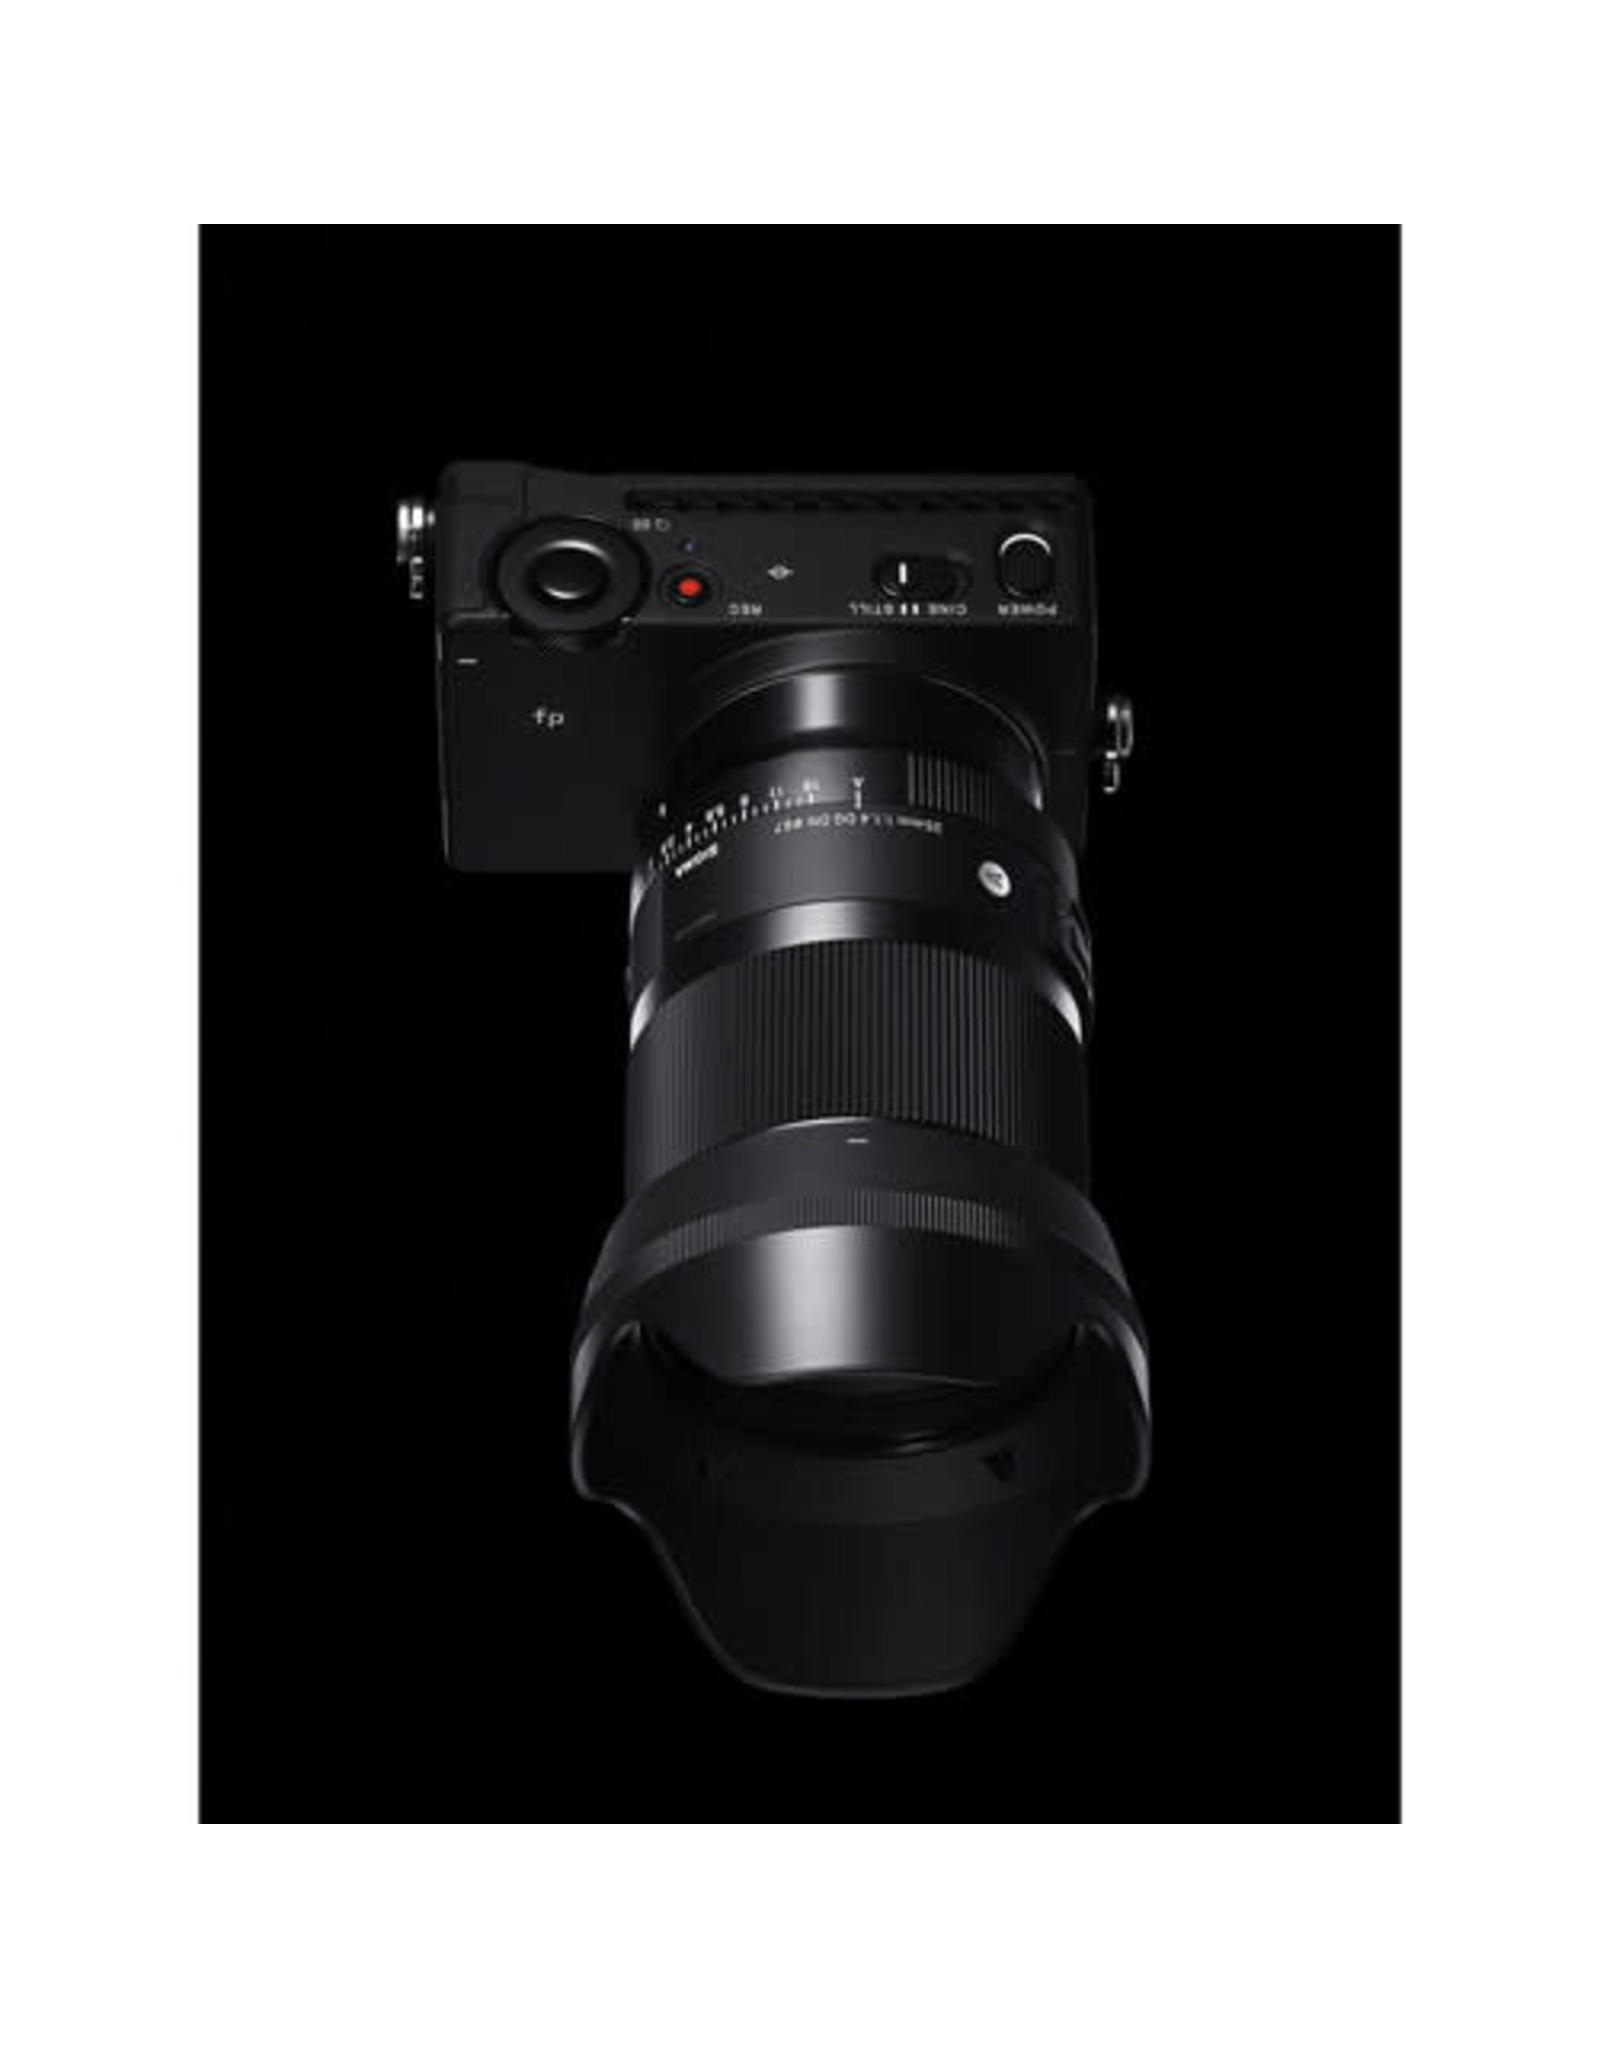 Sigma Sigma 35mm f/1.4 DG DN Art Lens (Specify Mount)